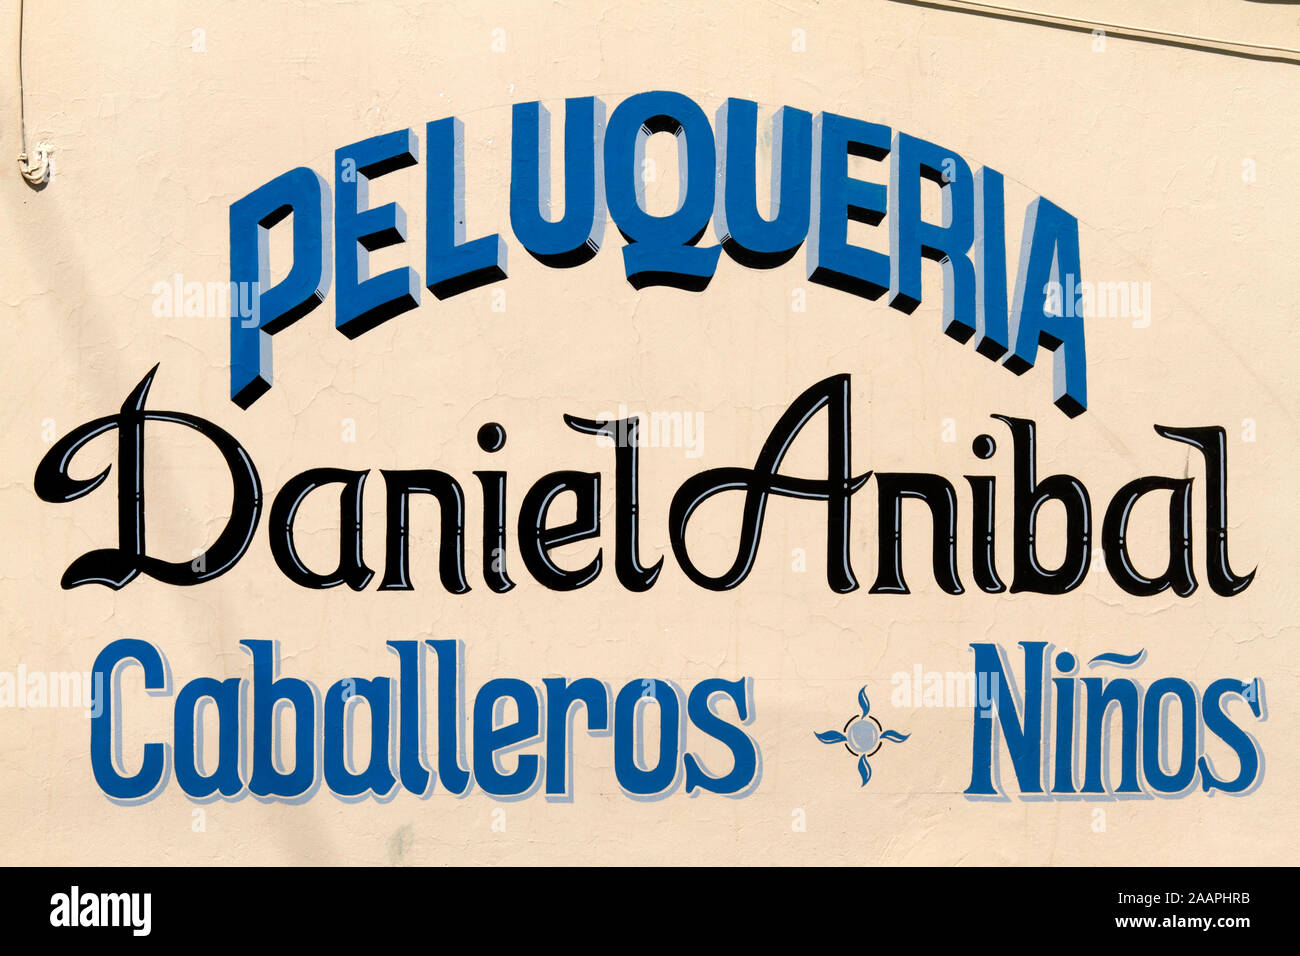 Peluqueria. Caballeros, ninos, hairdresser for men and children. Stock Photo